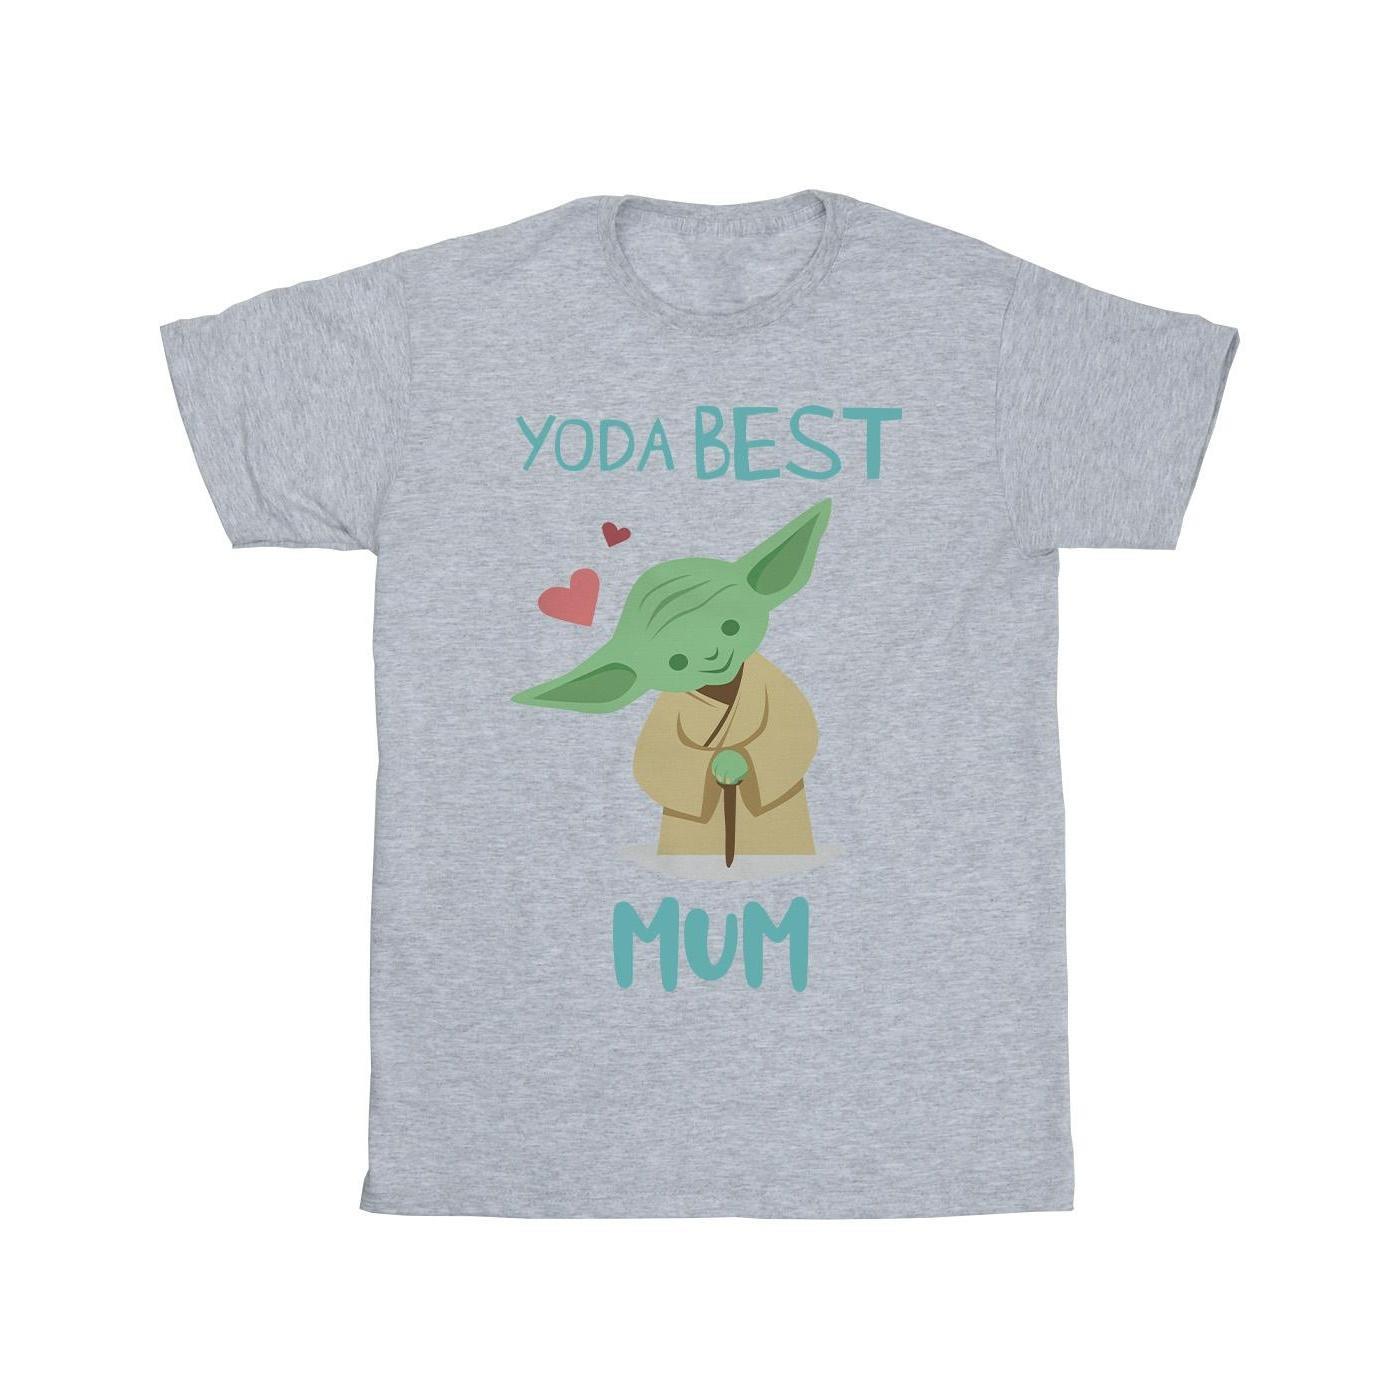 Star Wars Mens Yoda Best Mum T-Shirt (Sports Grey) (XXL)